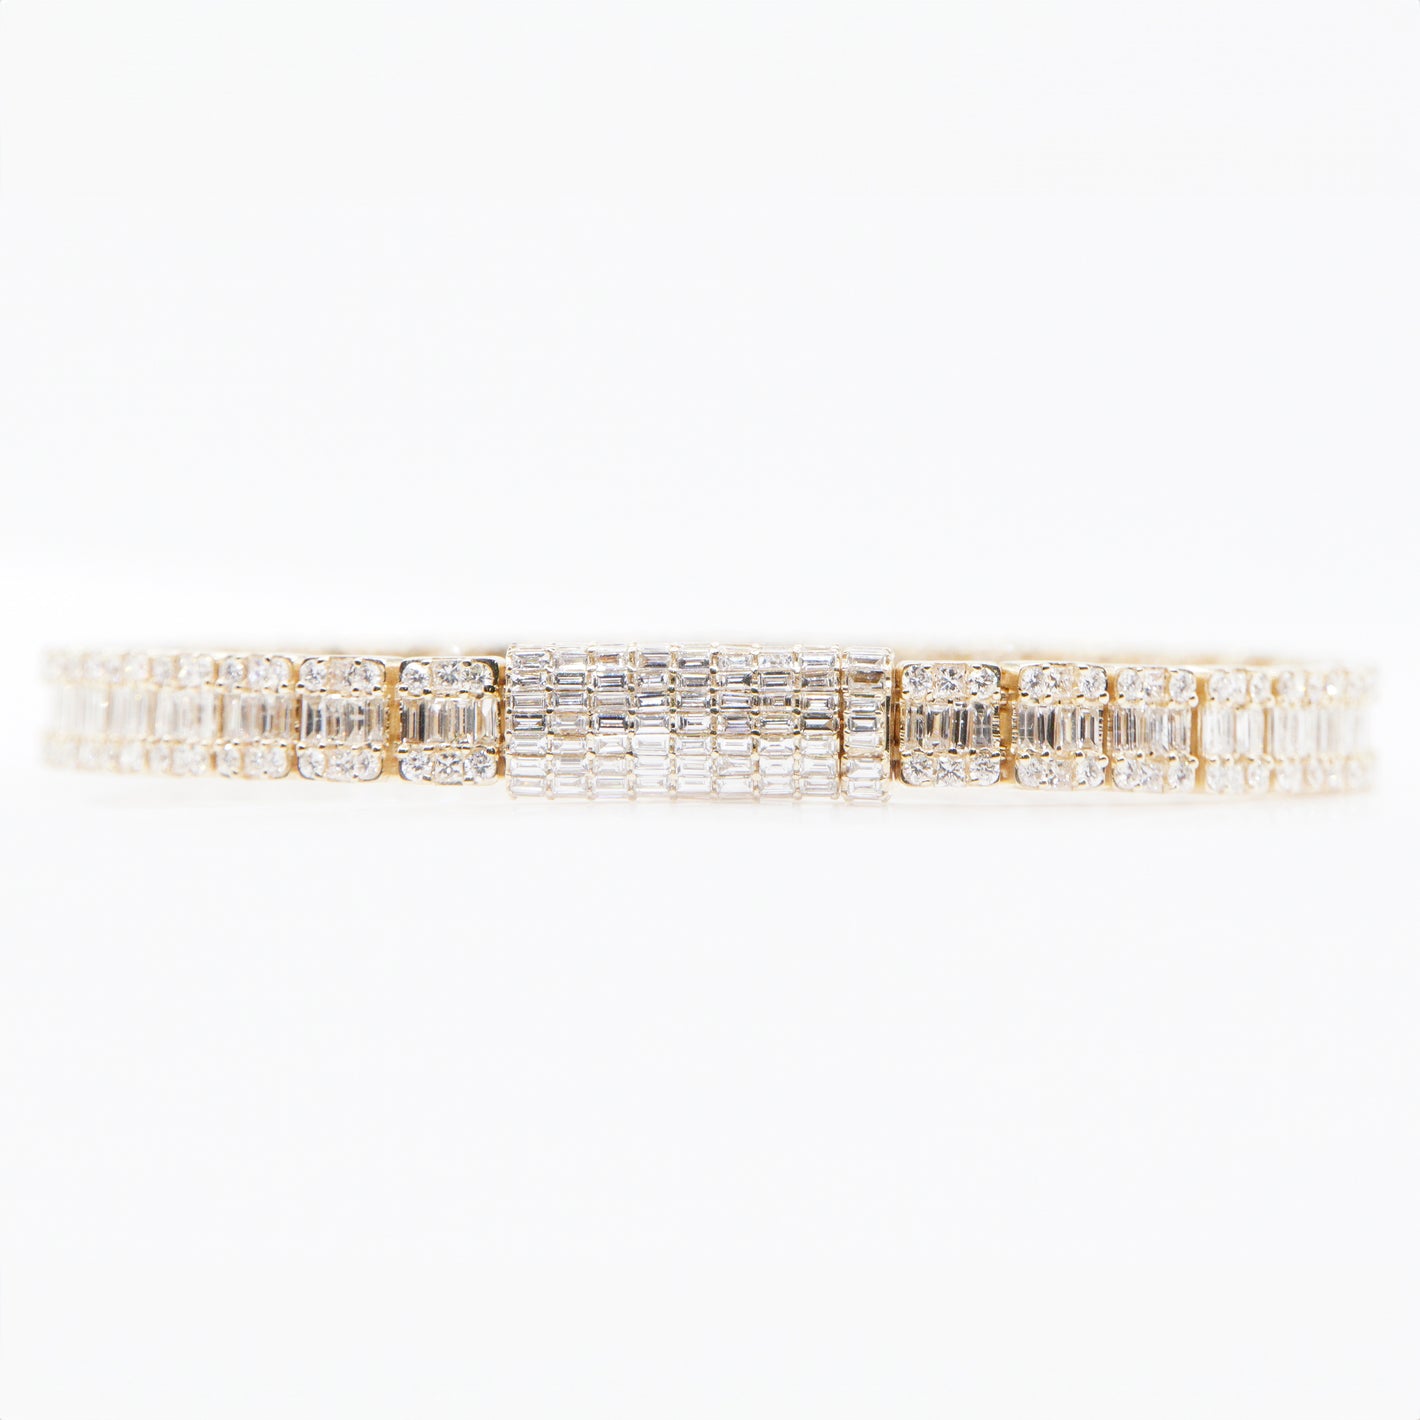 14k Solid Gold VVS/VS1 Baguette Diamond Chandelier Tennis Bracelet